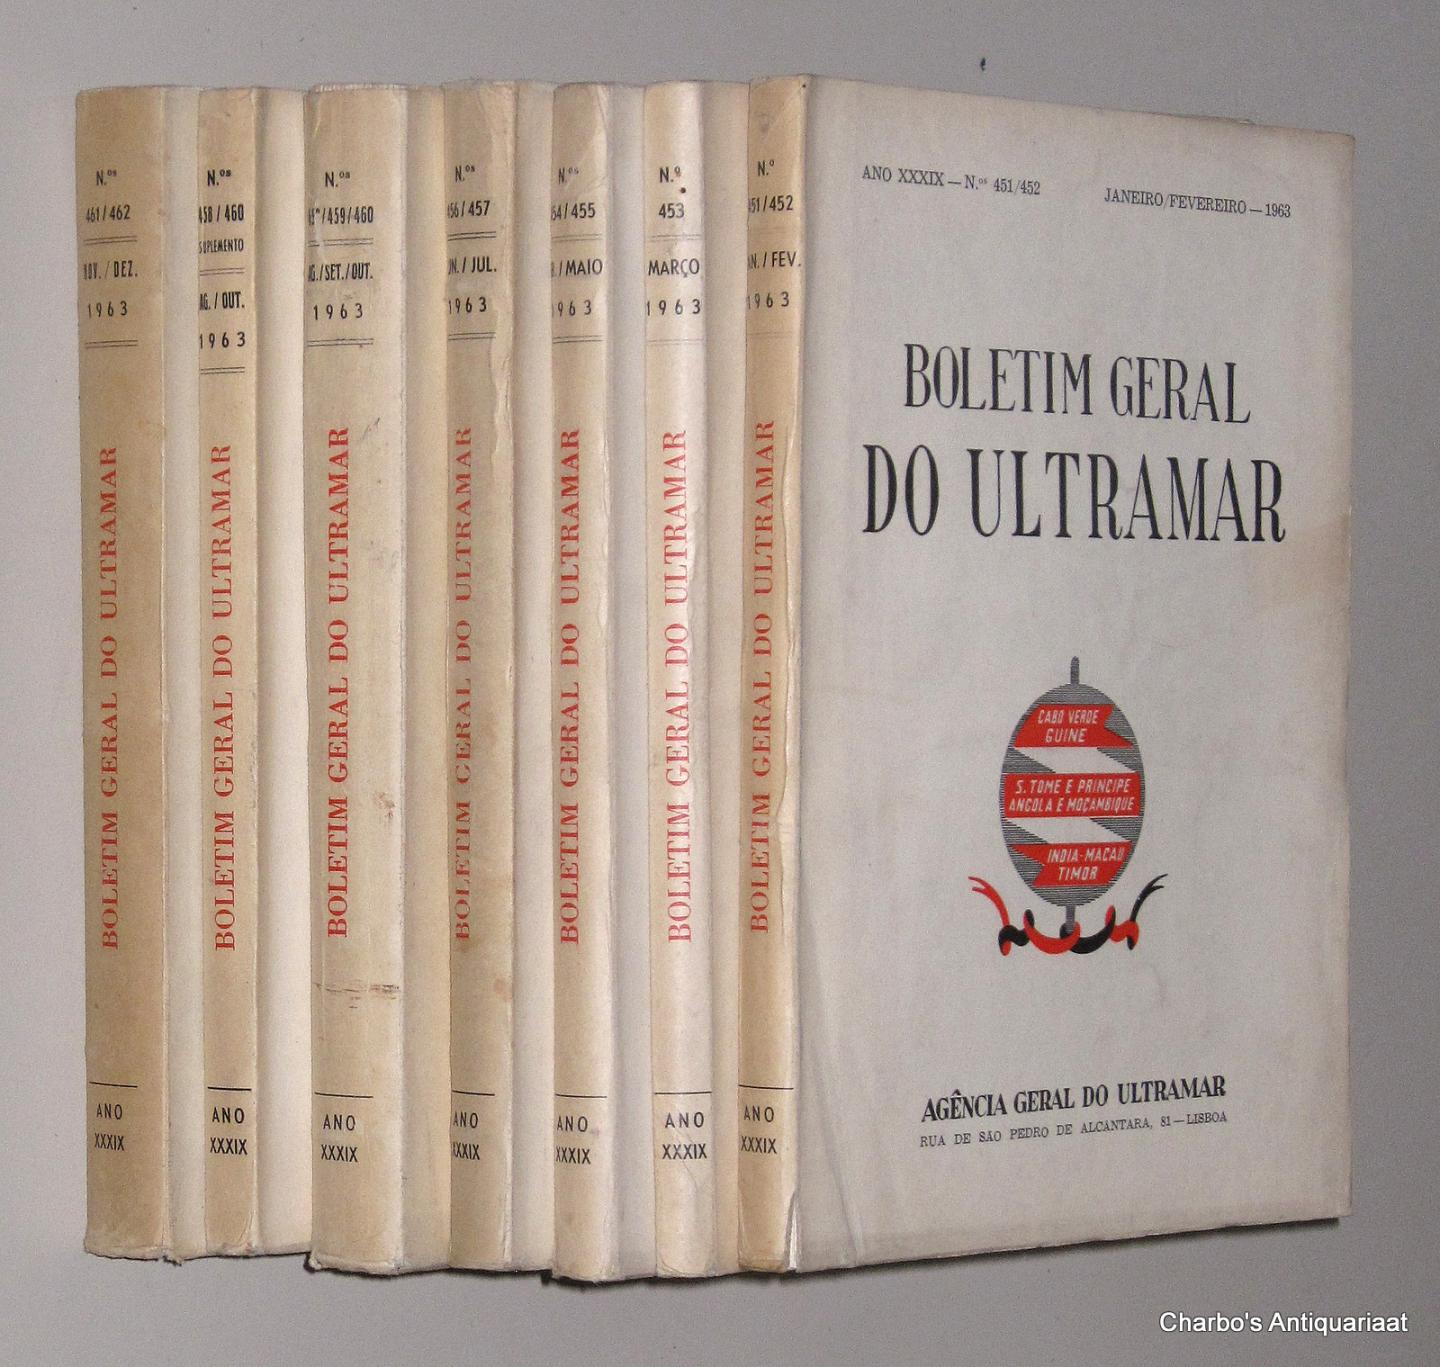 AGENCIA GERAL DO ULTRAMAR, - Boletim Geral do Ultramar, ano XXXIX No. 451, Janeiro - No. 462, Dezembro 1963.